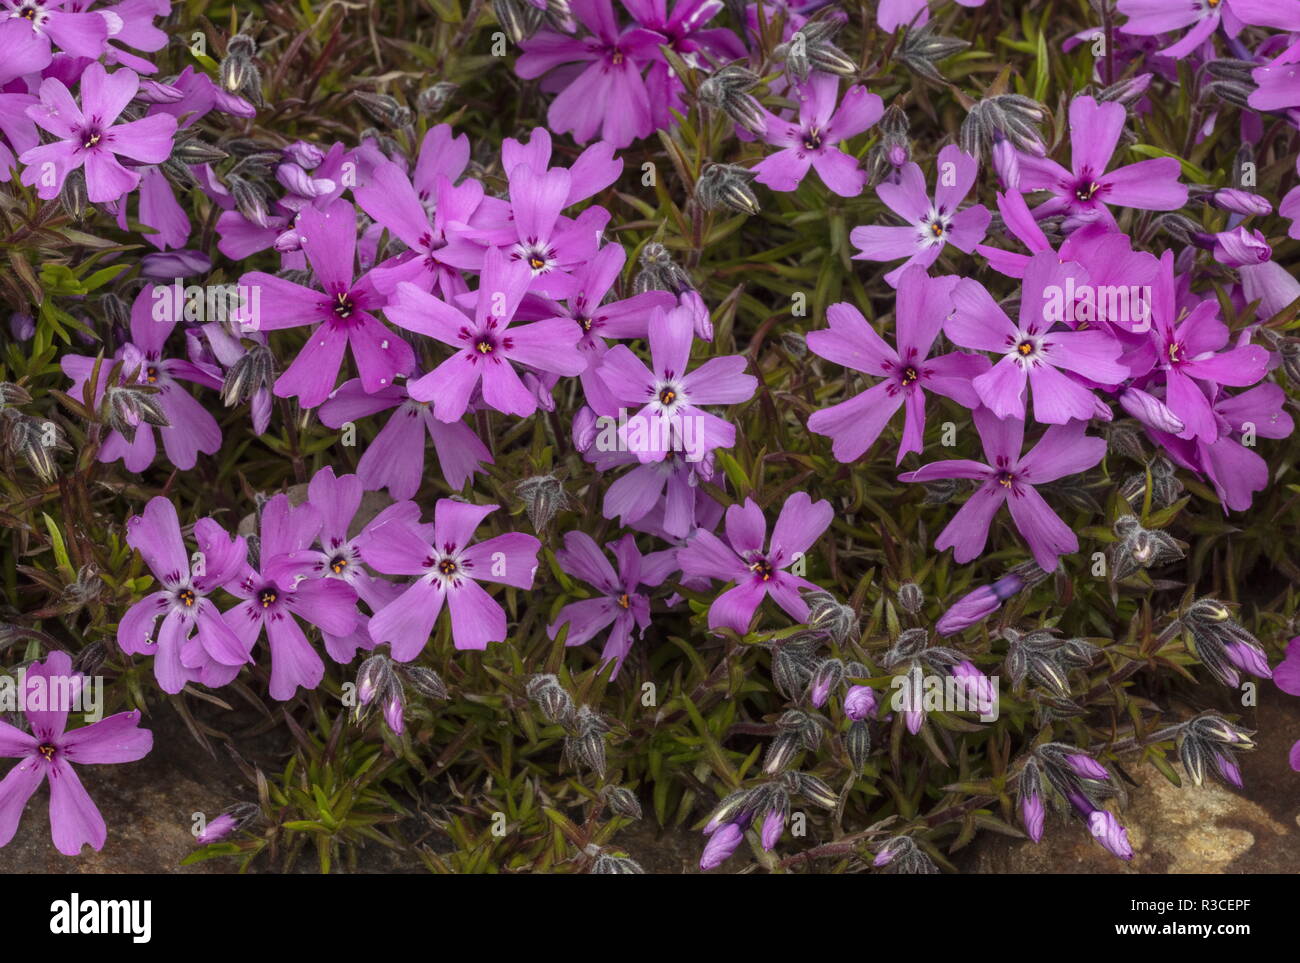 Creeping phlox, Phlox subulata, in flower. Central USA. Stock Photo